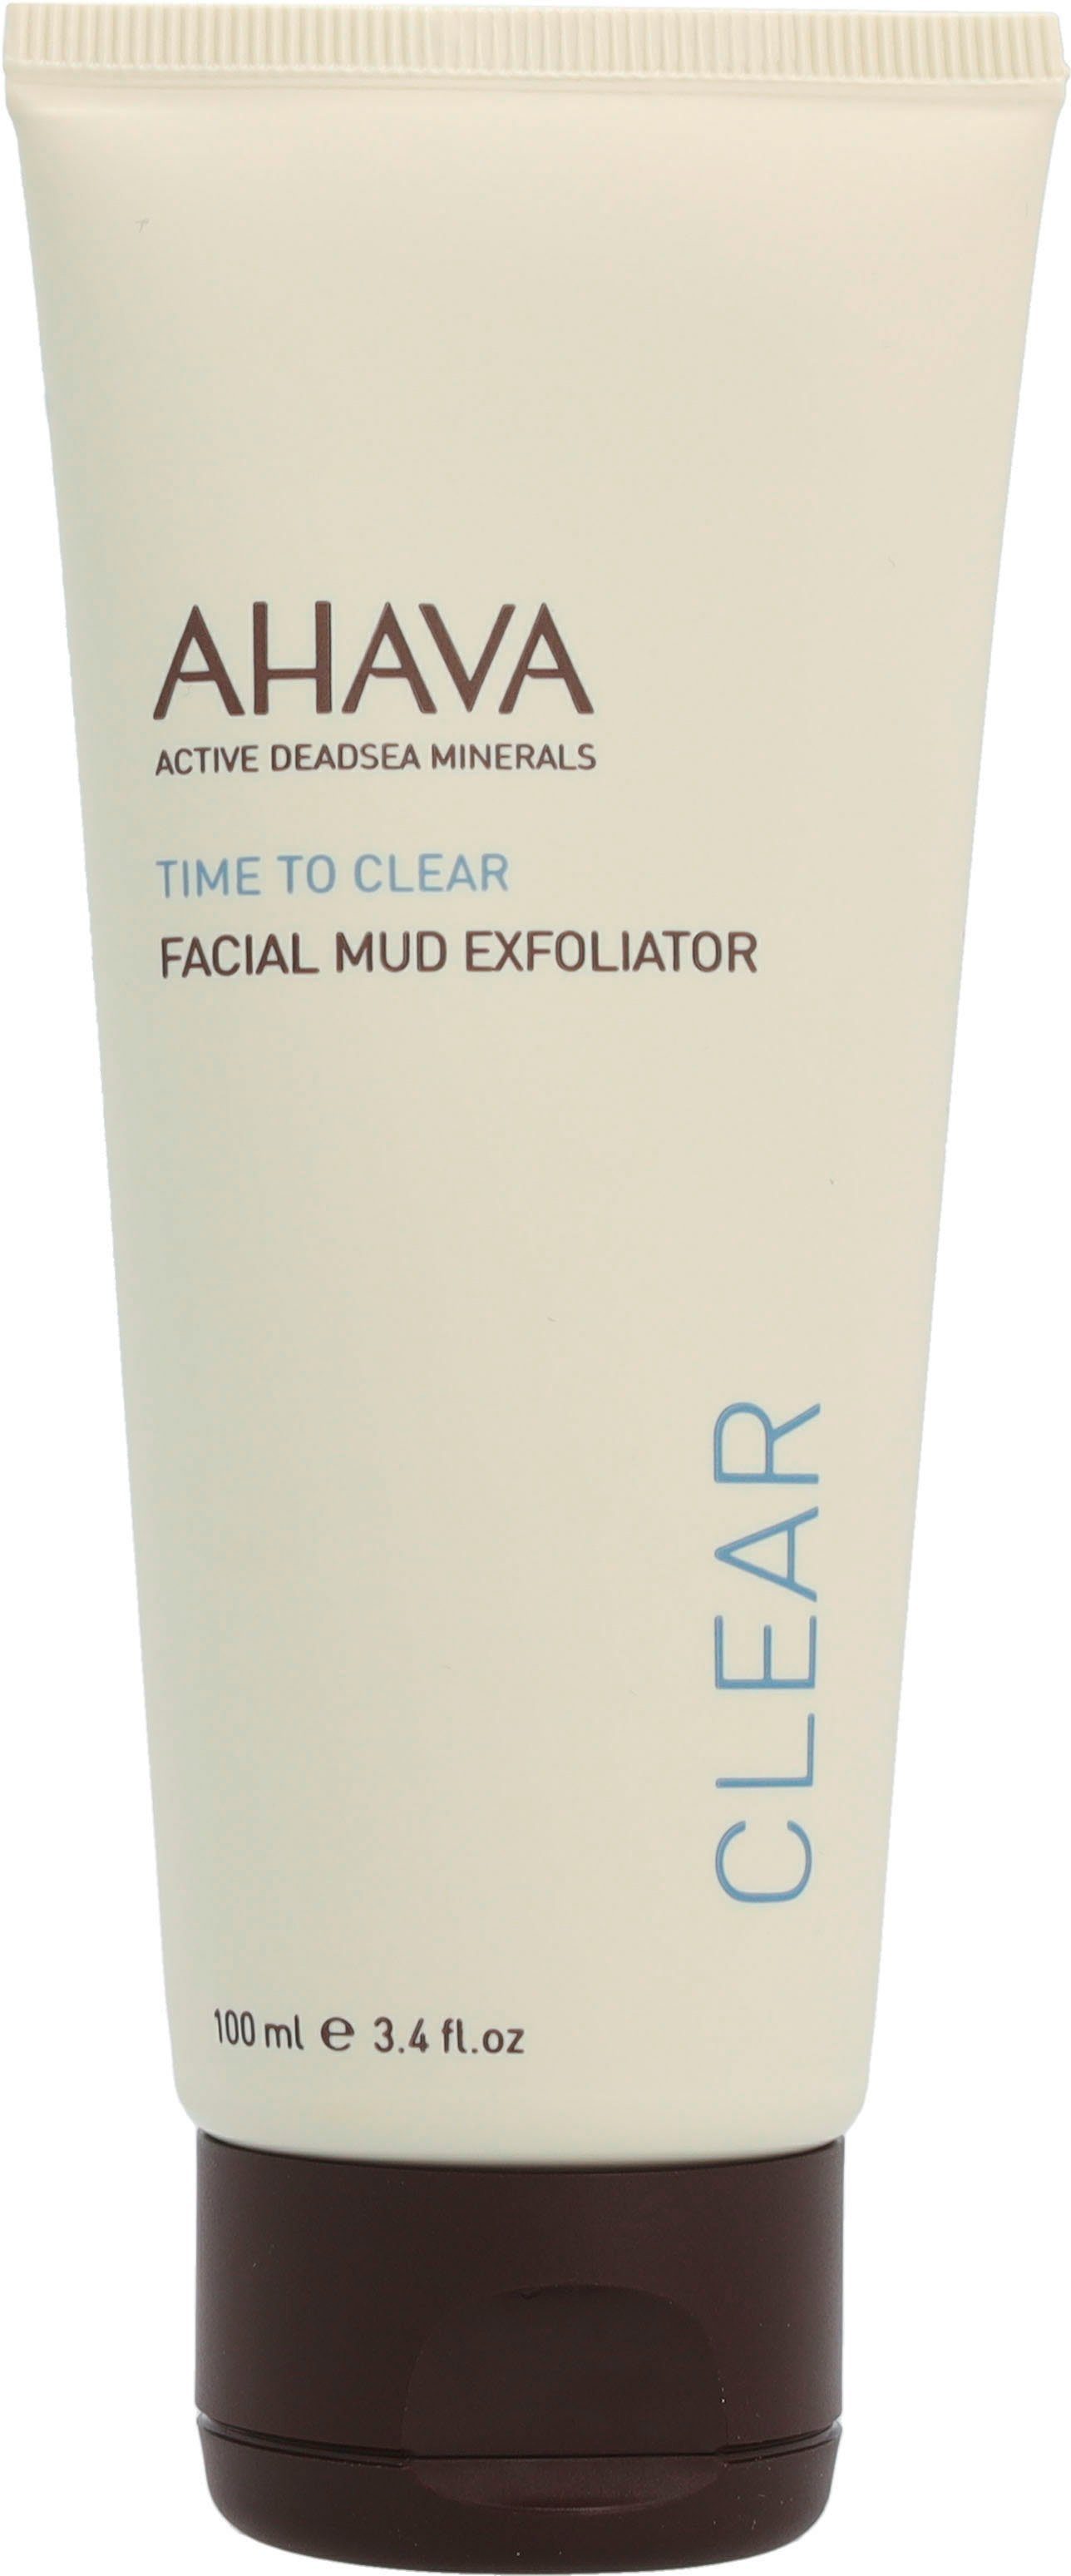 AHAVA Gesichts-Reinigungsschaum Mud Exfoliator To Facial Time Clear